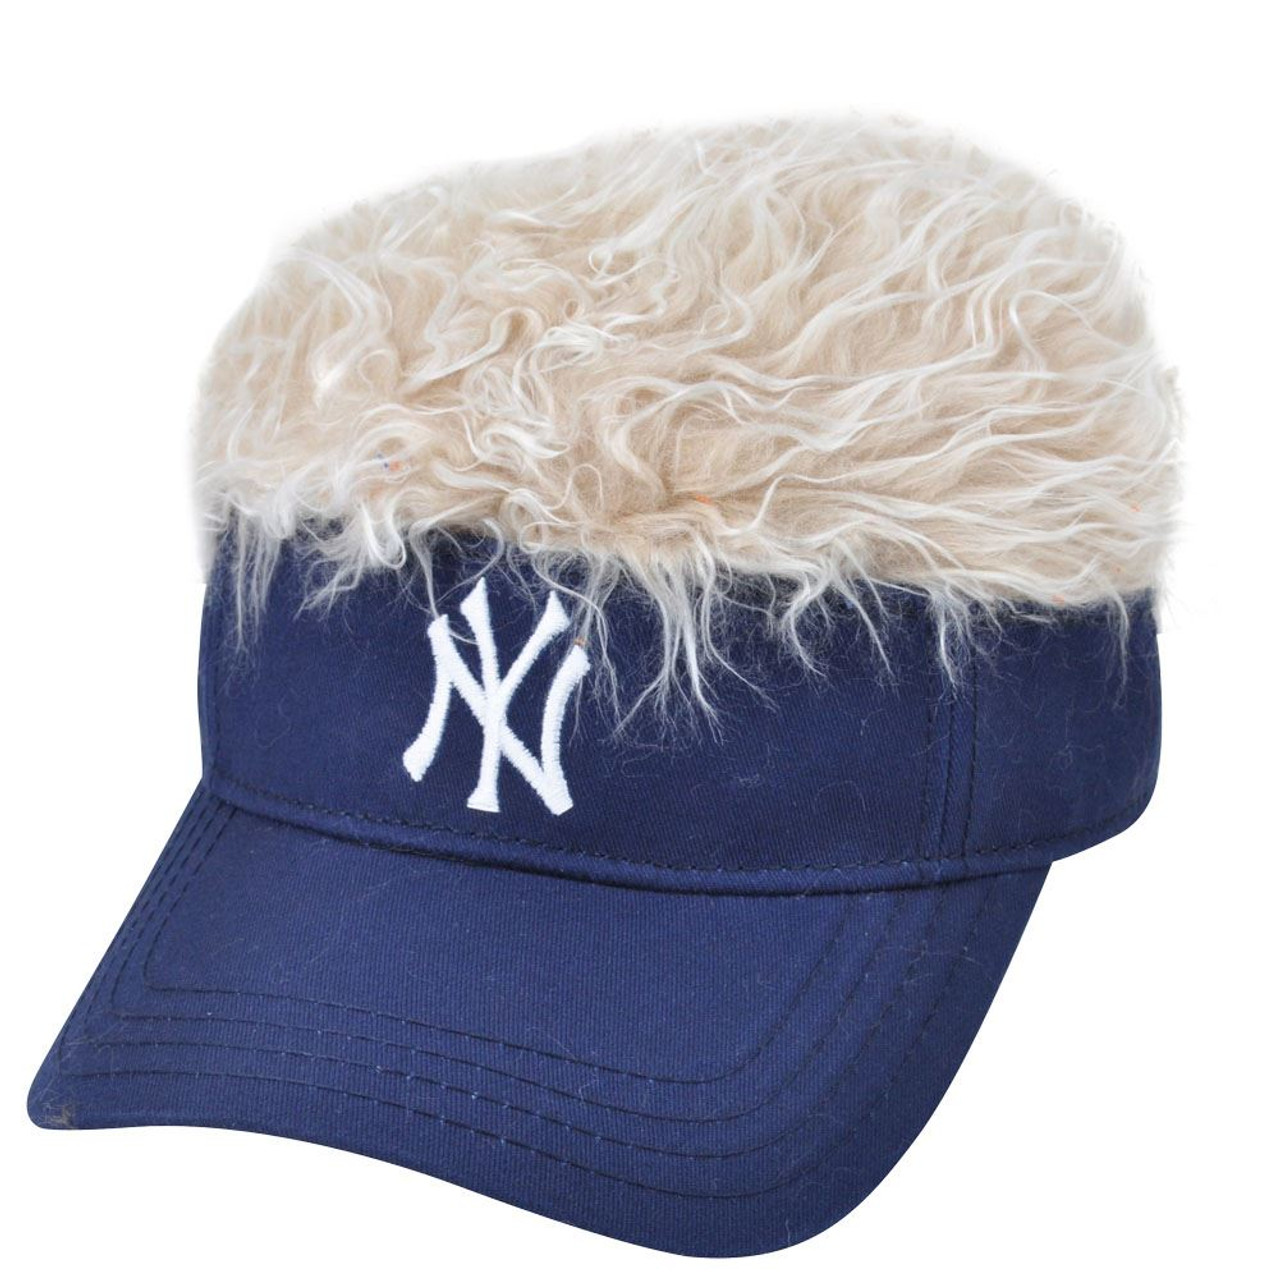 MLB NY New York Yankees Creed Flair Blonde Hair Visor Adjustable Fan Velcro  Hat - Cap Store